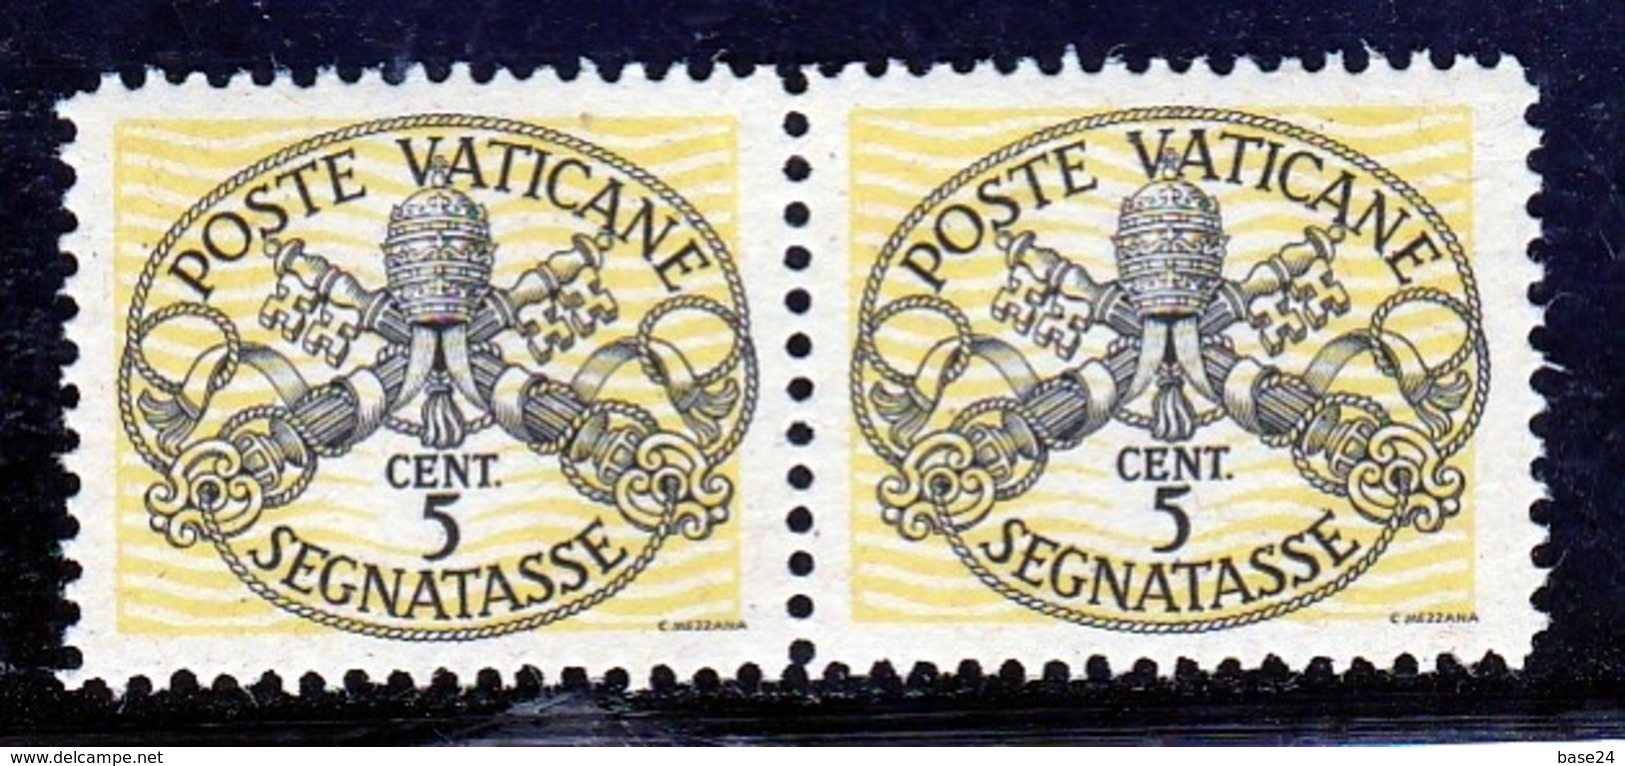 1946 Vaticano Vatican SEGNATASSE  POSTAGE DUE Coppia 5c Righe Larghe Carta Bianca MNH** Firm.Biondi - Postage Due